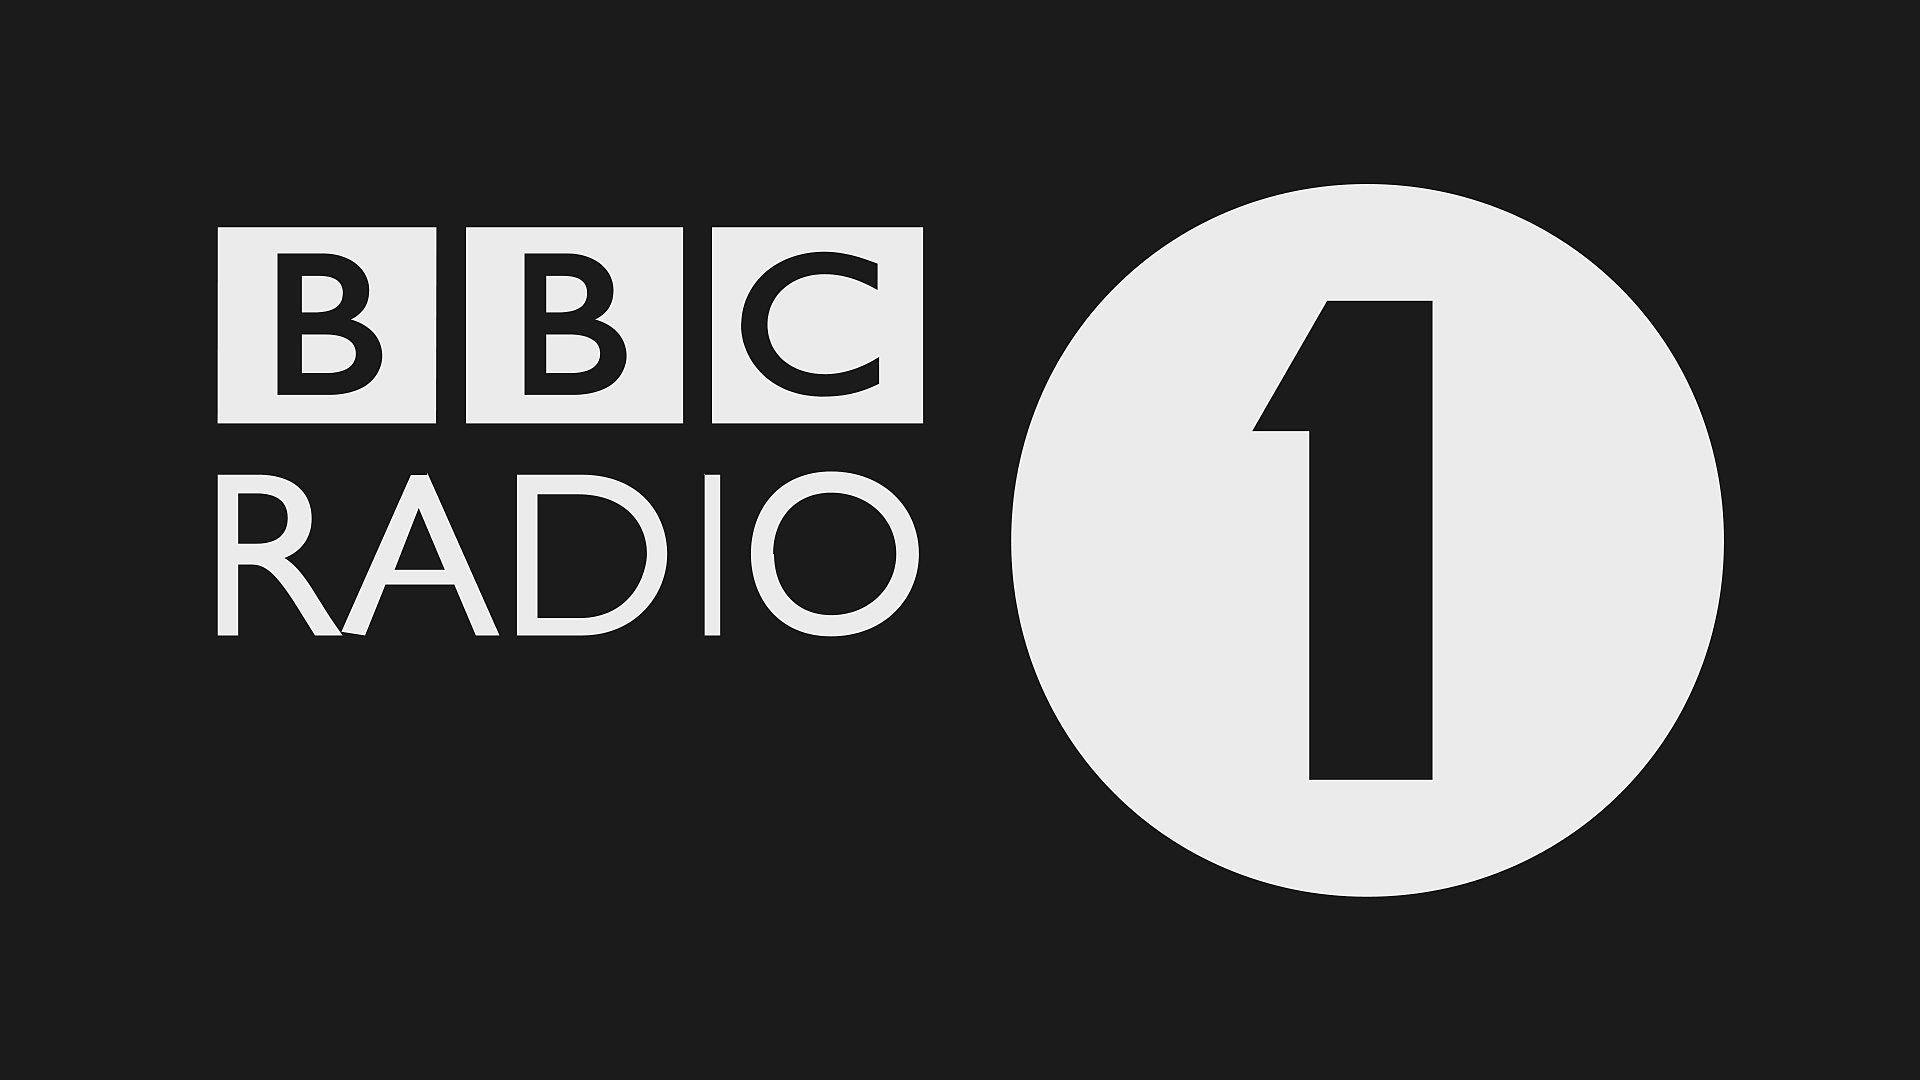 Bbcr1 Logo - BBC 1 Playlist